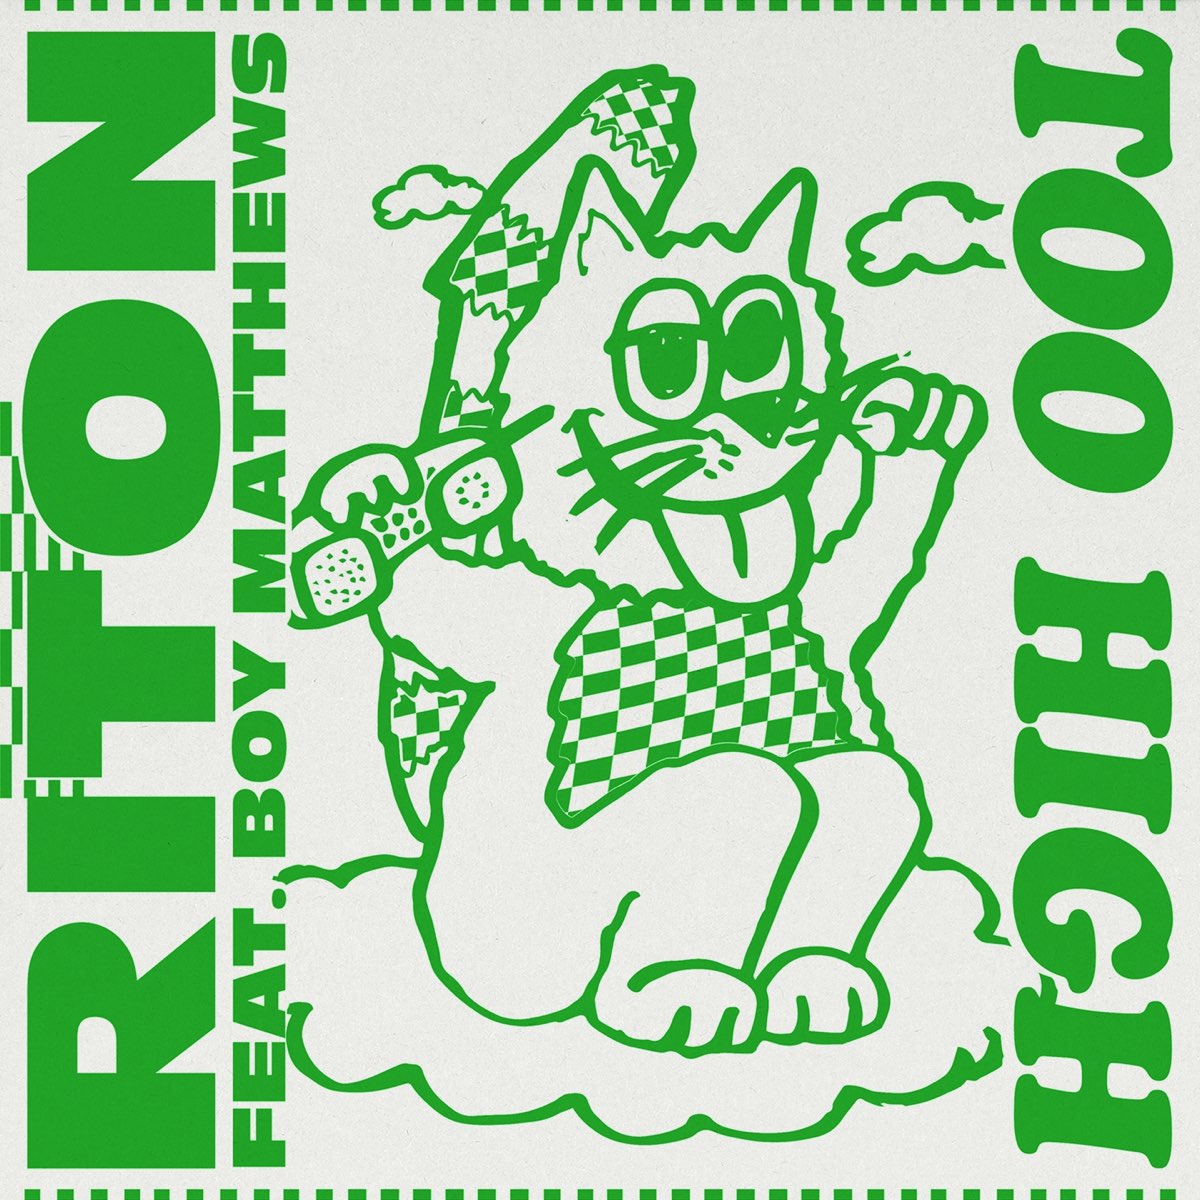 Riton featuring Boy Matthews — Too High cover artwork